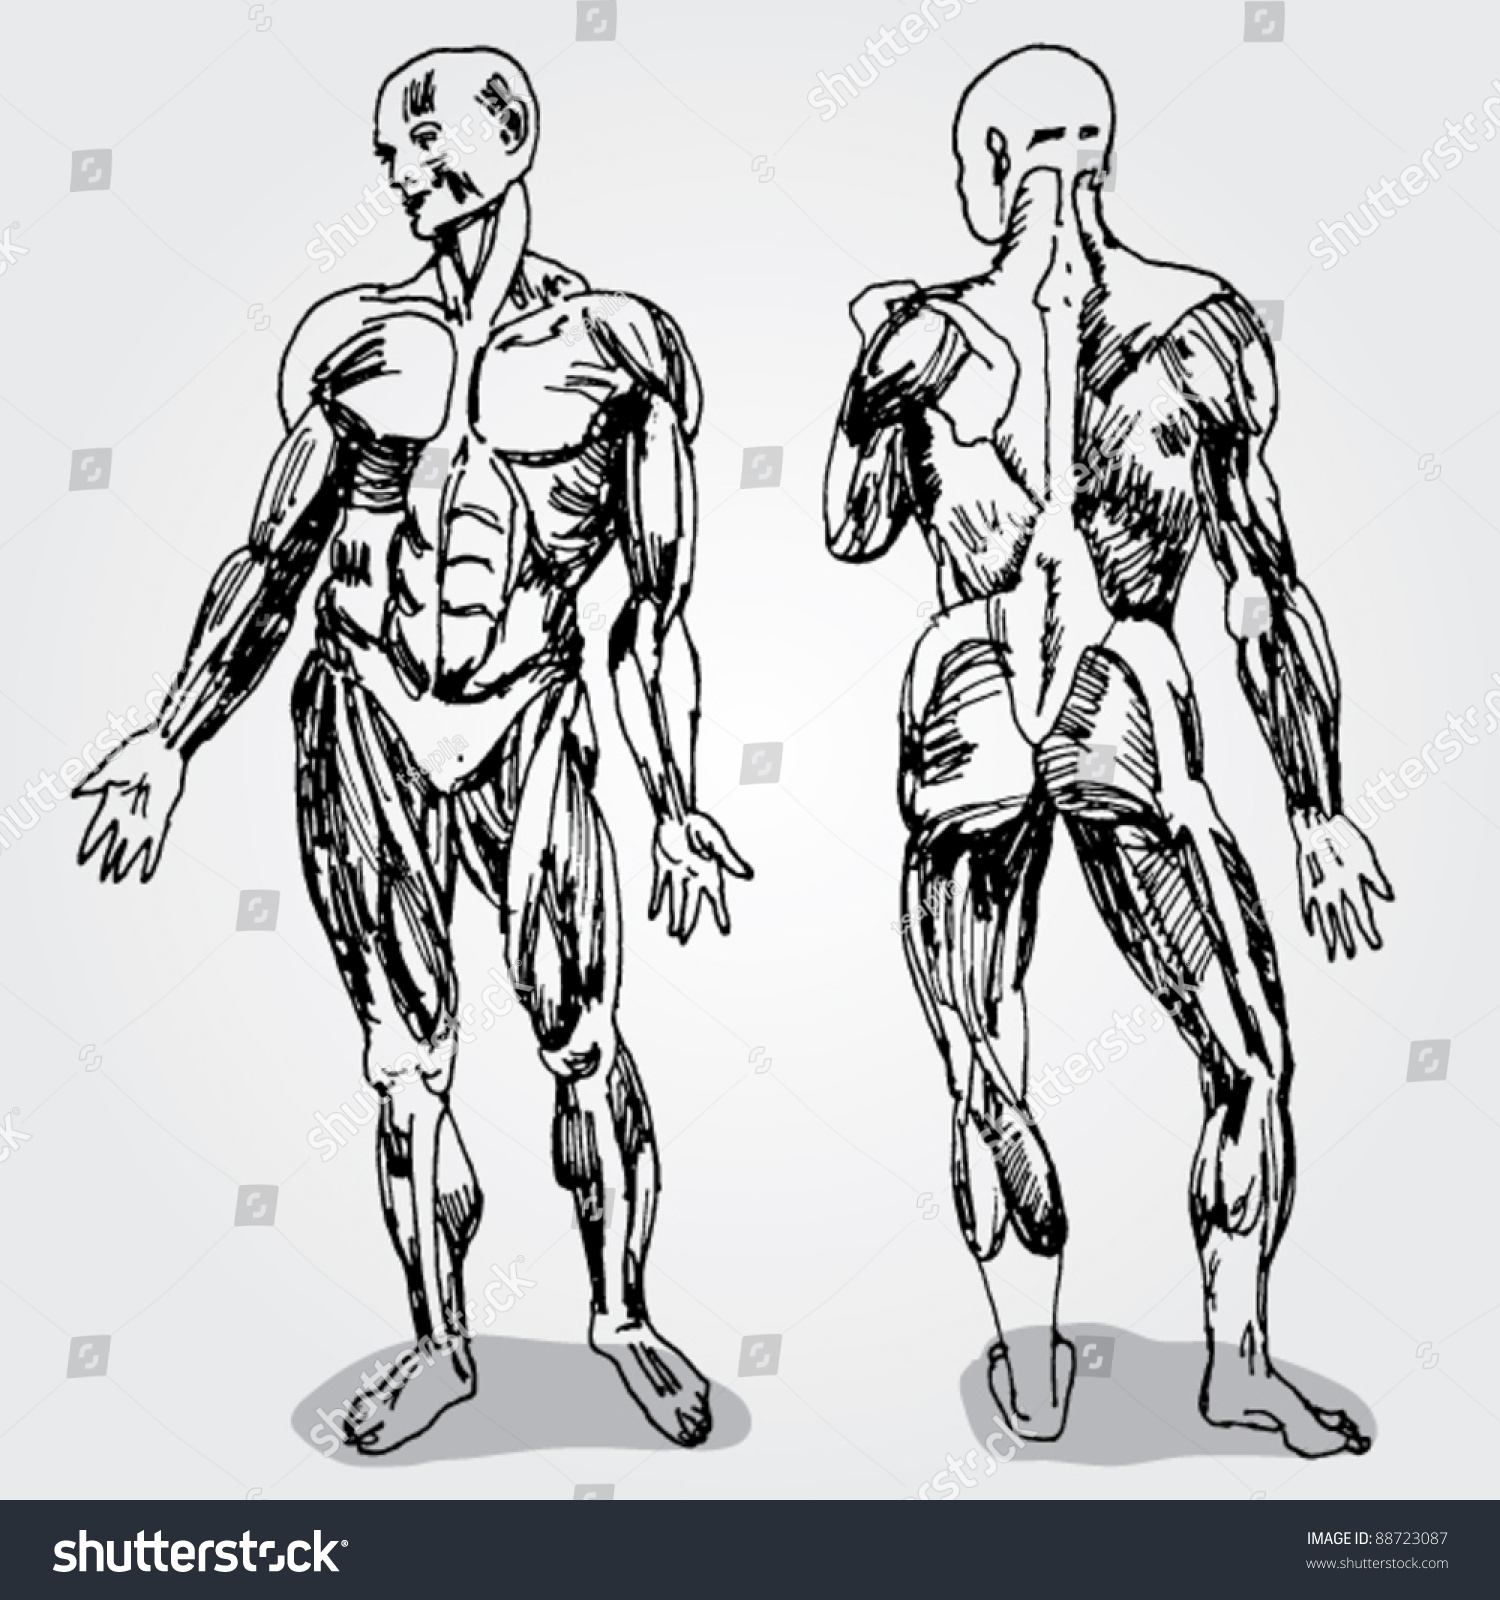 Sketch Of Men'S Anatomy Stock Vector Illustration 88723087 : Shutterstock